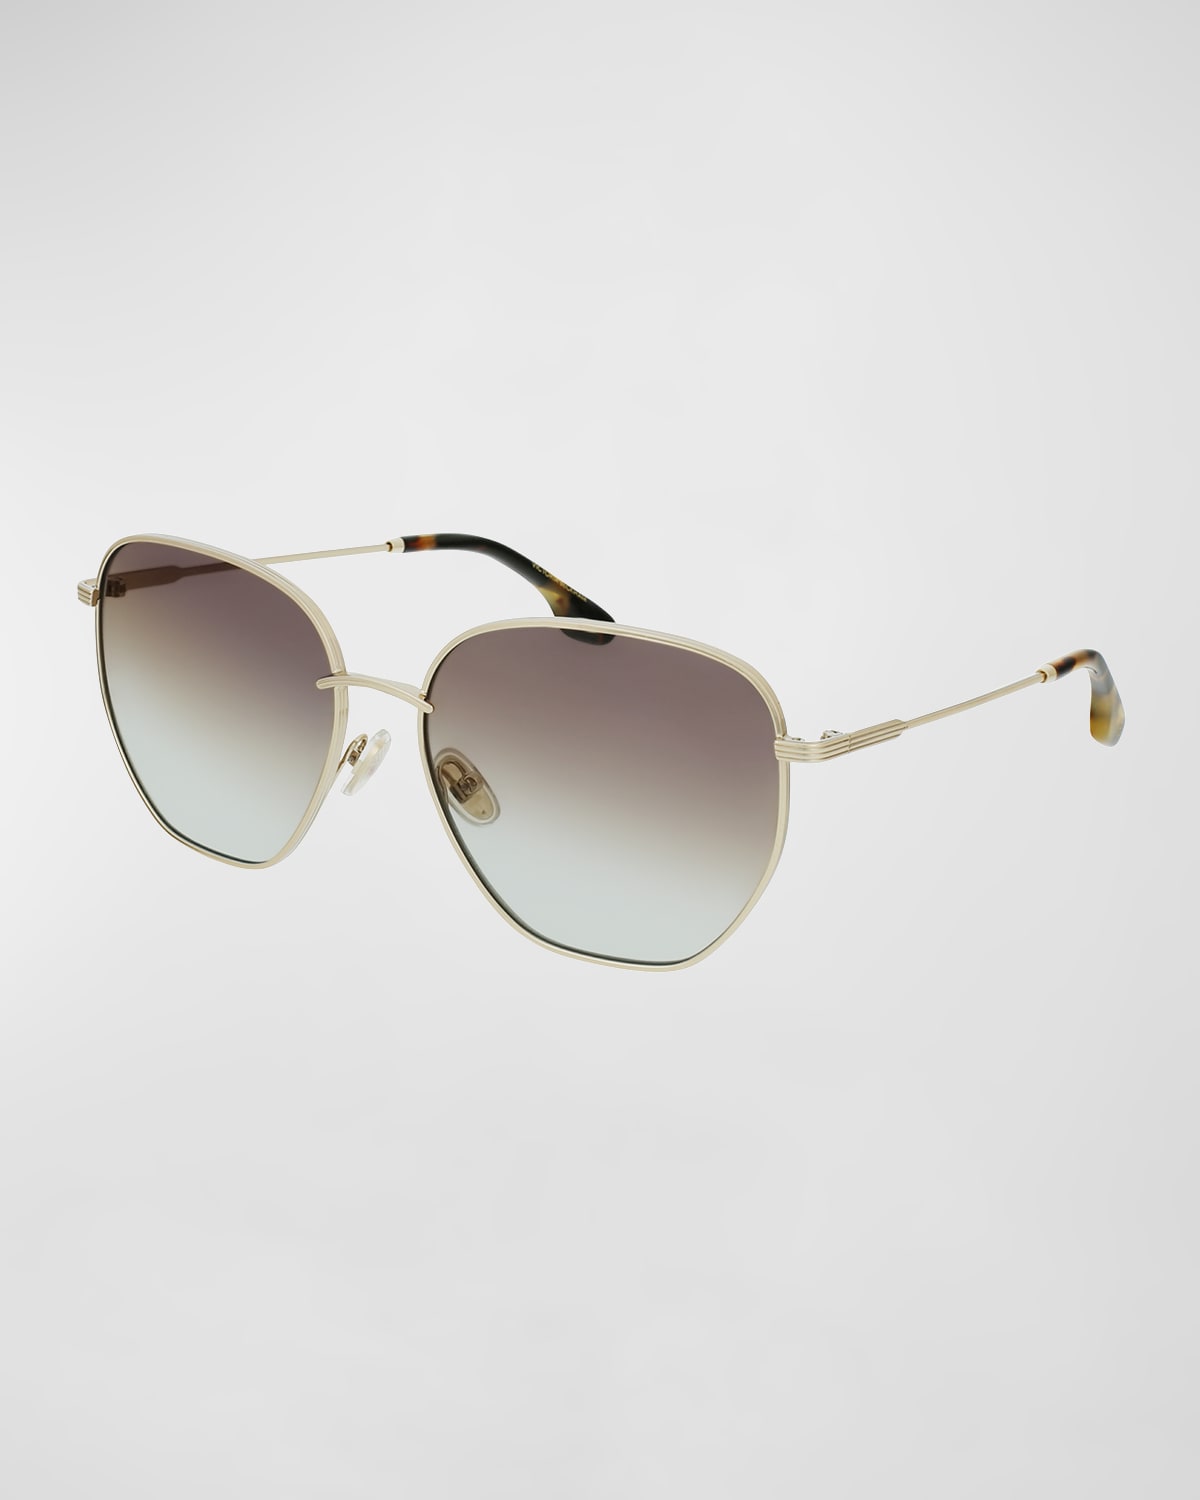 Victoria Beckham Geometric Square Metal Sunglasses In Gold Grey Brown